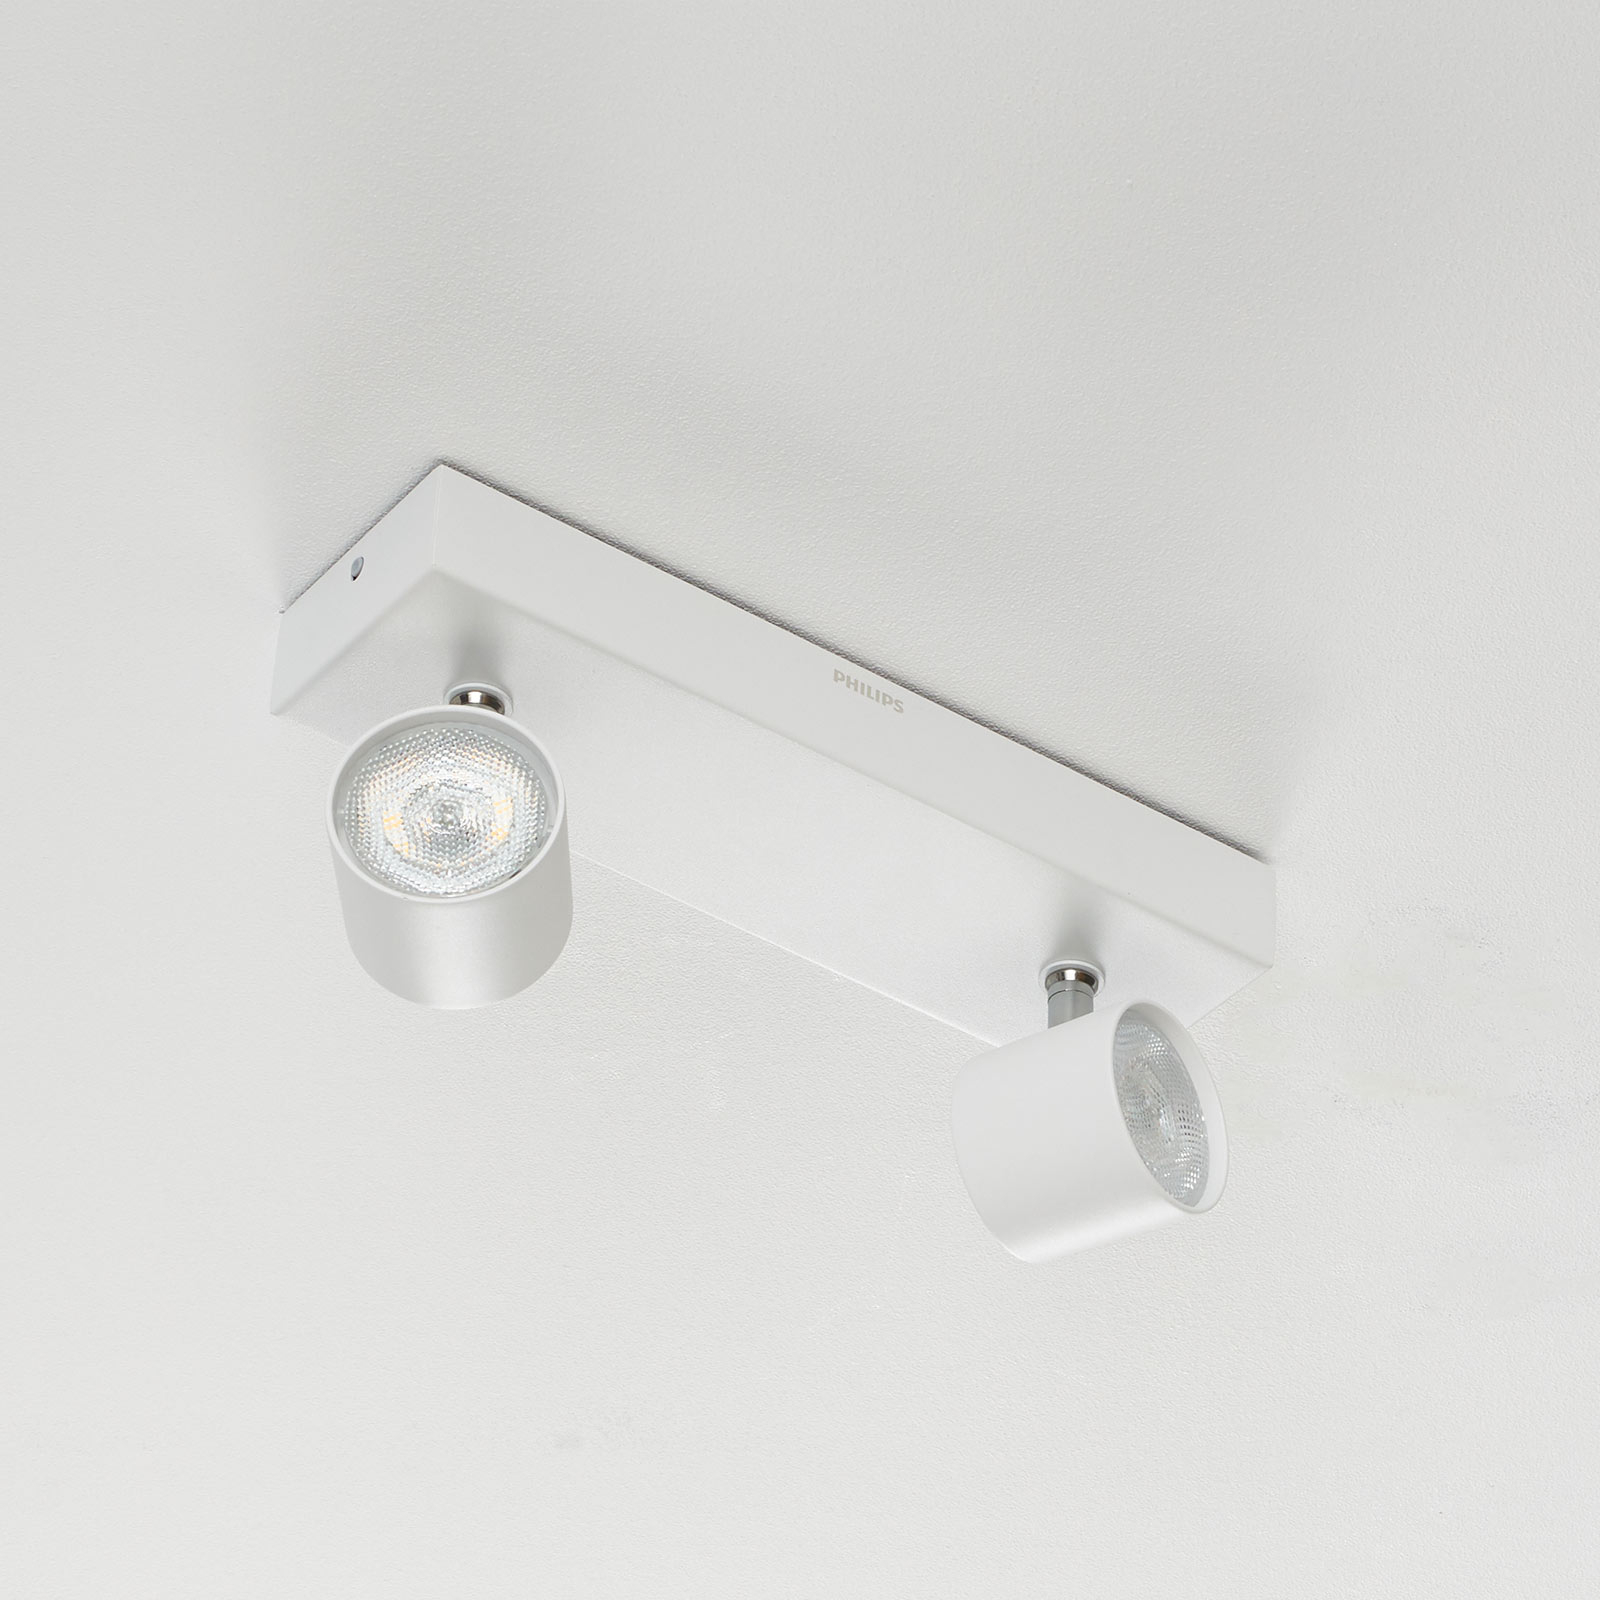 operator aantrekkelijk residu Star 2-lamp LED spot, warmglow, wit | Lampen24.nl